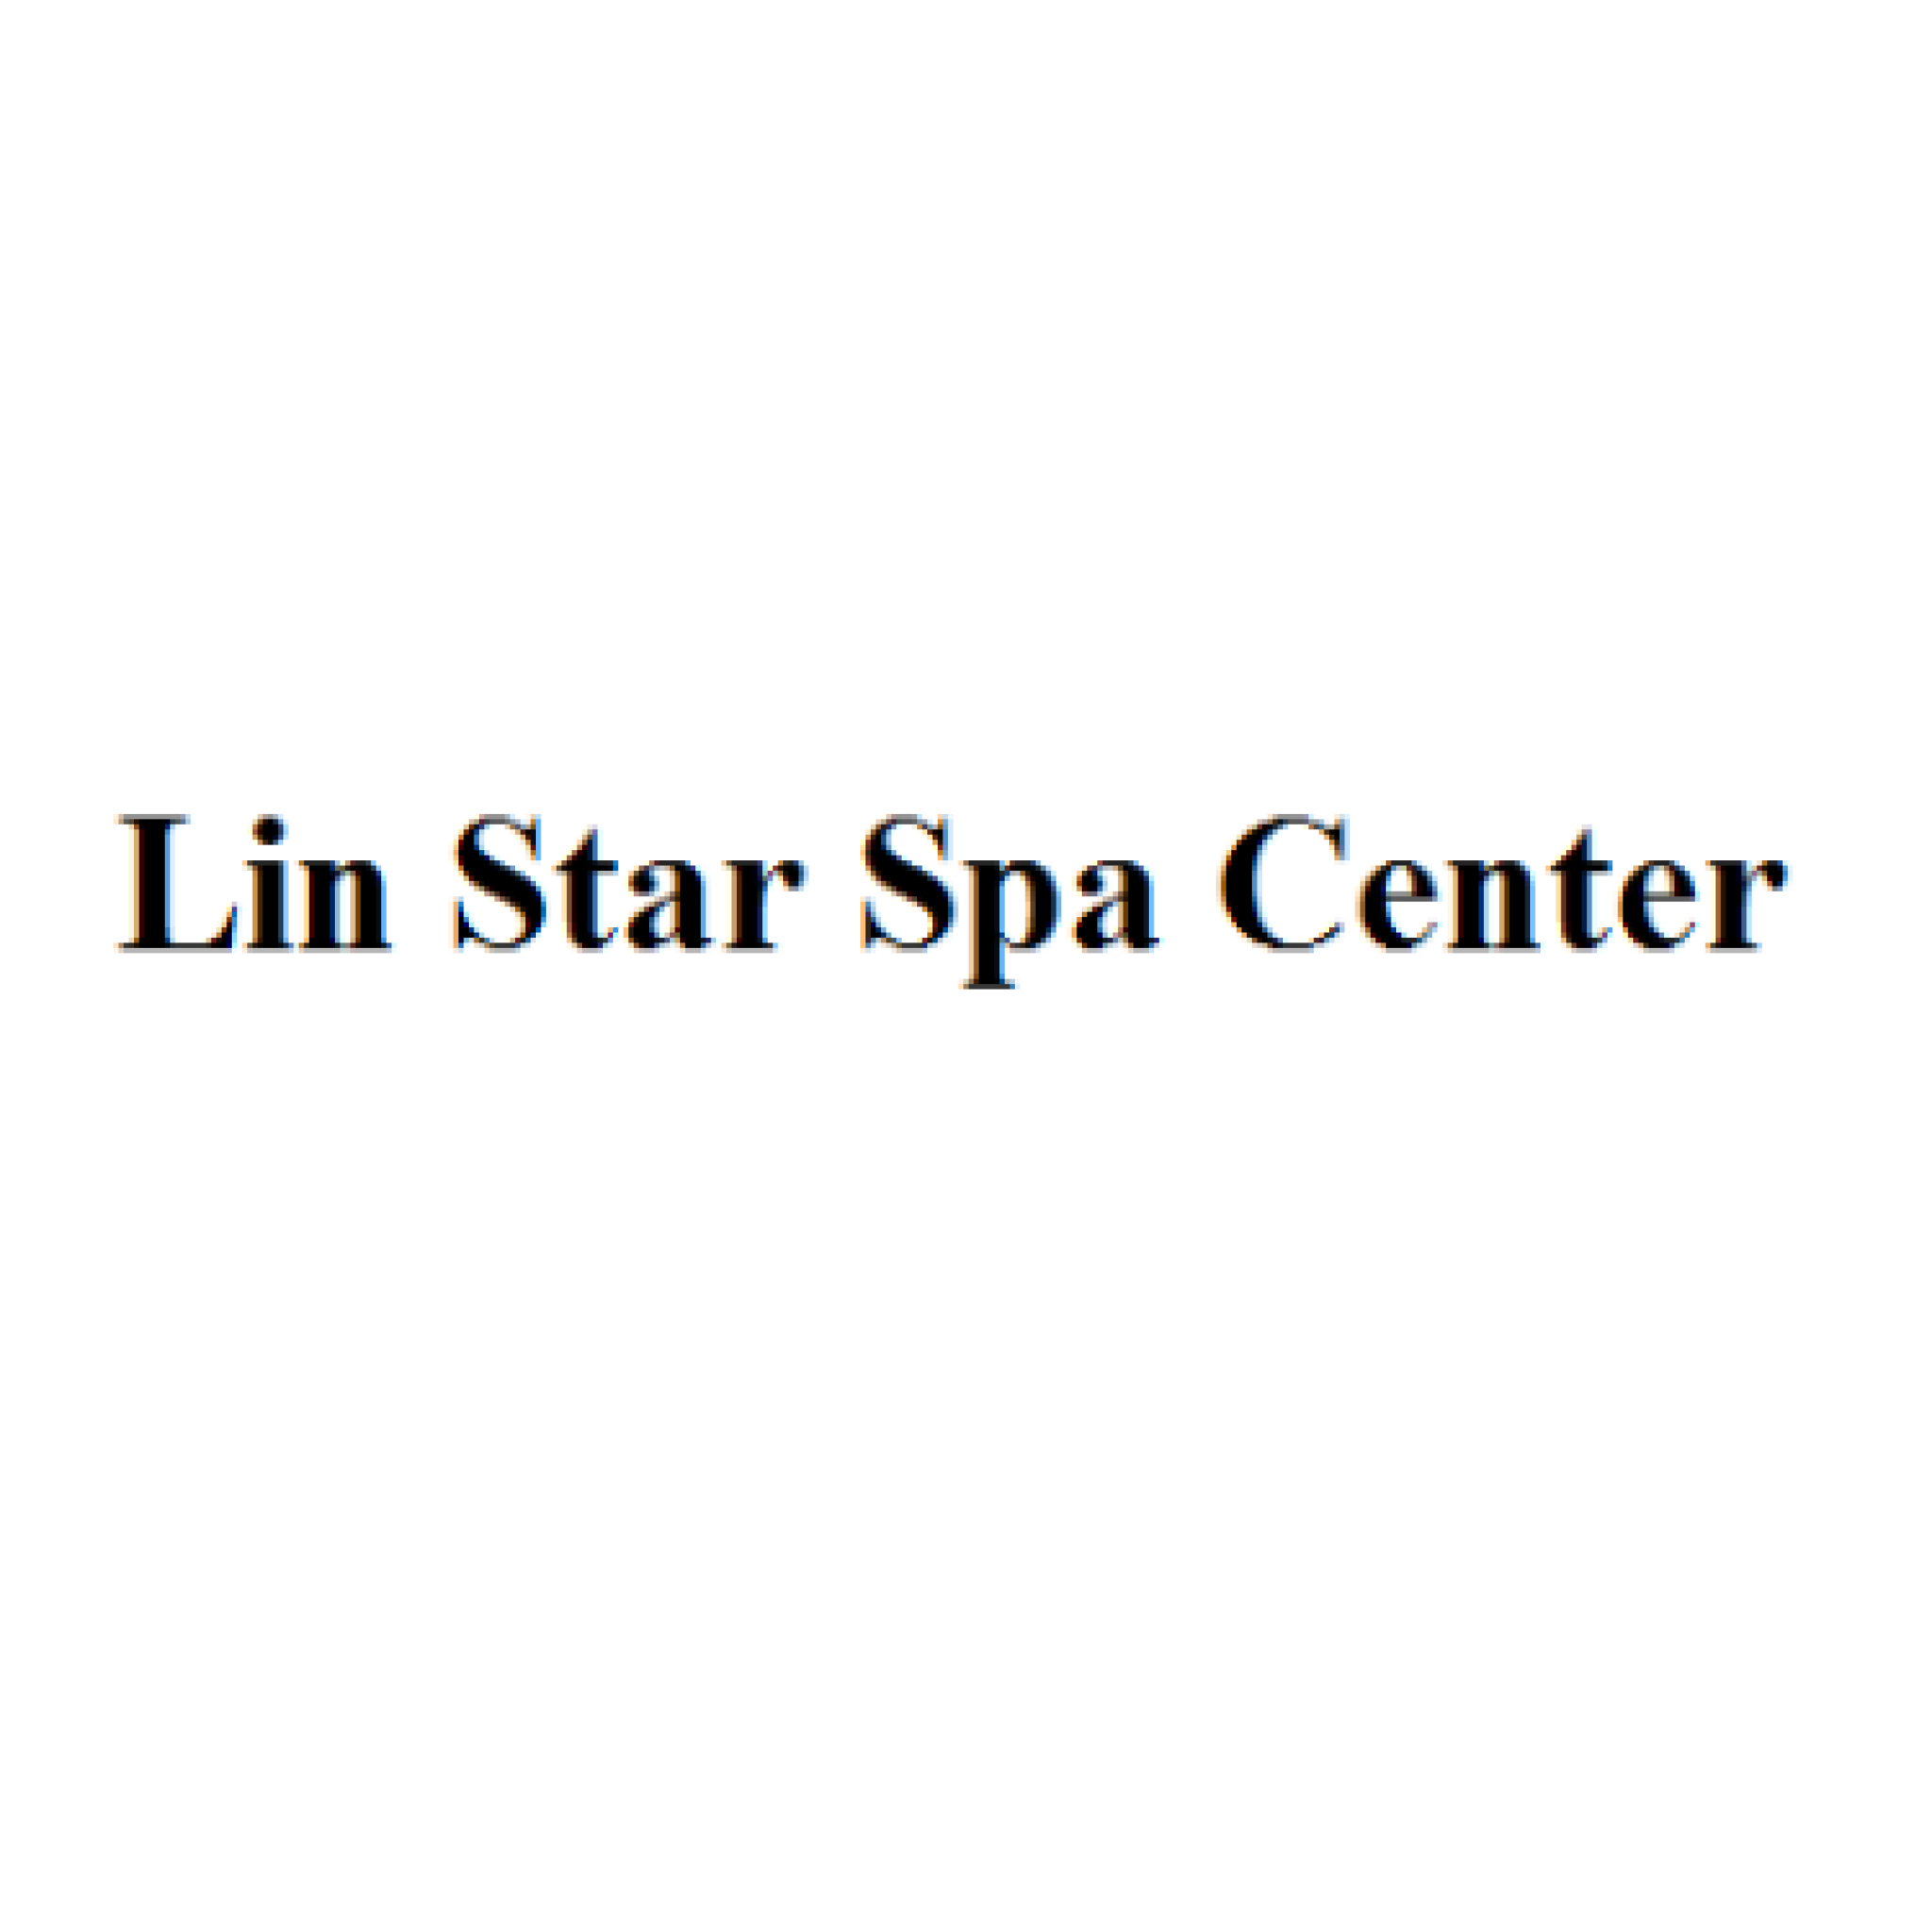 Lin Star Spa Center